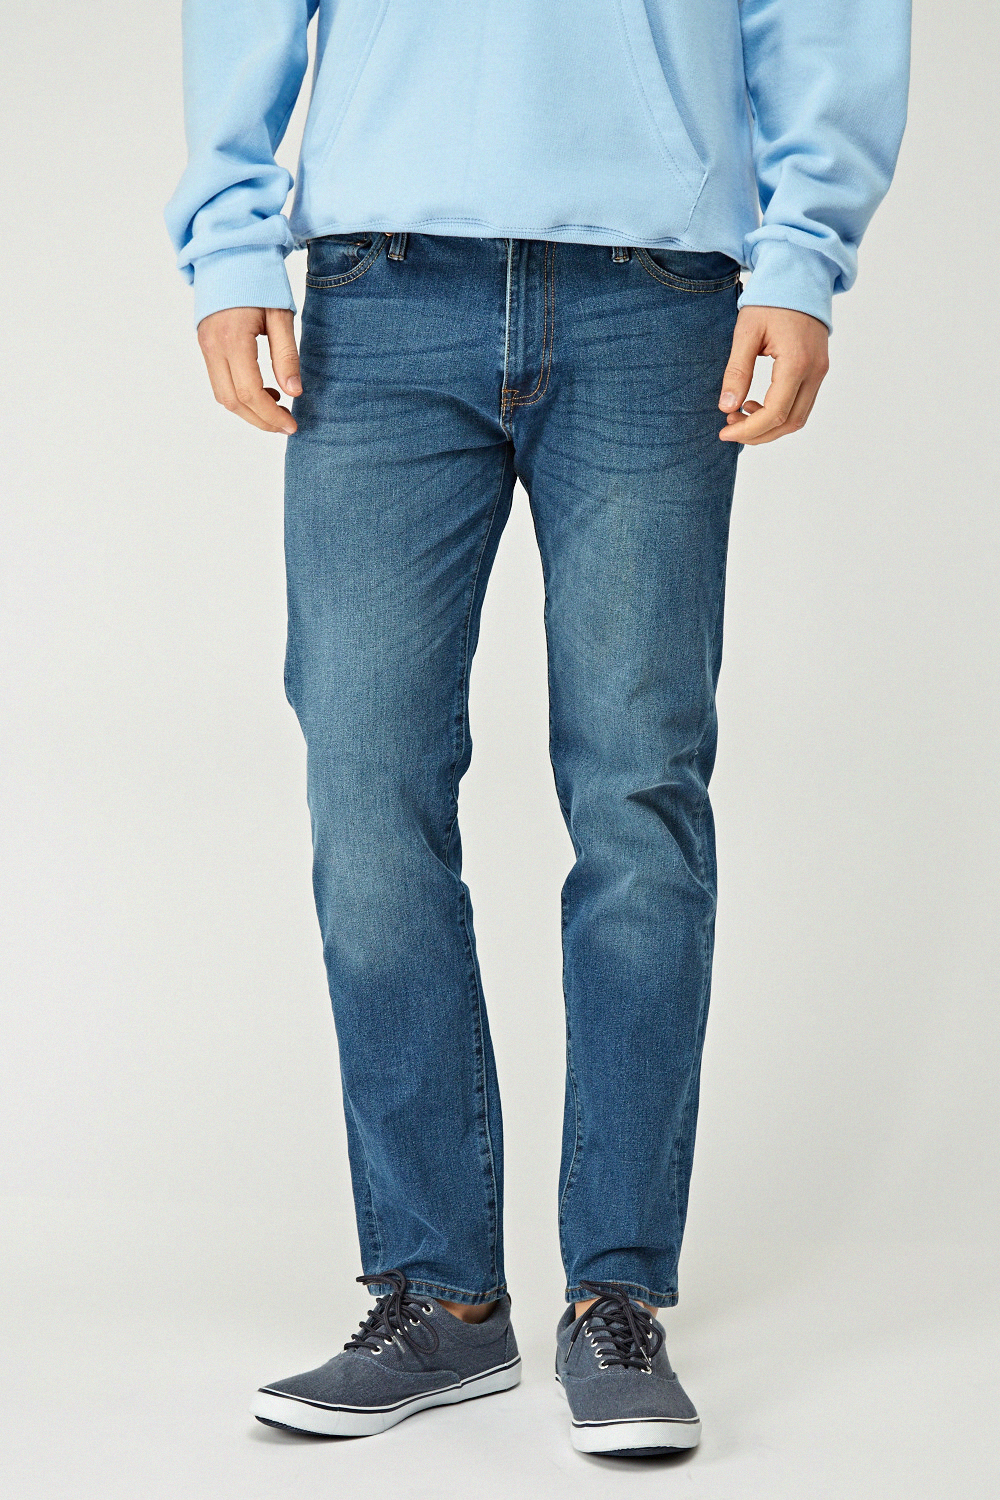 Mens Straight Leg Denim Jeans - Just $7